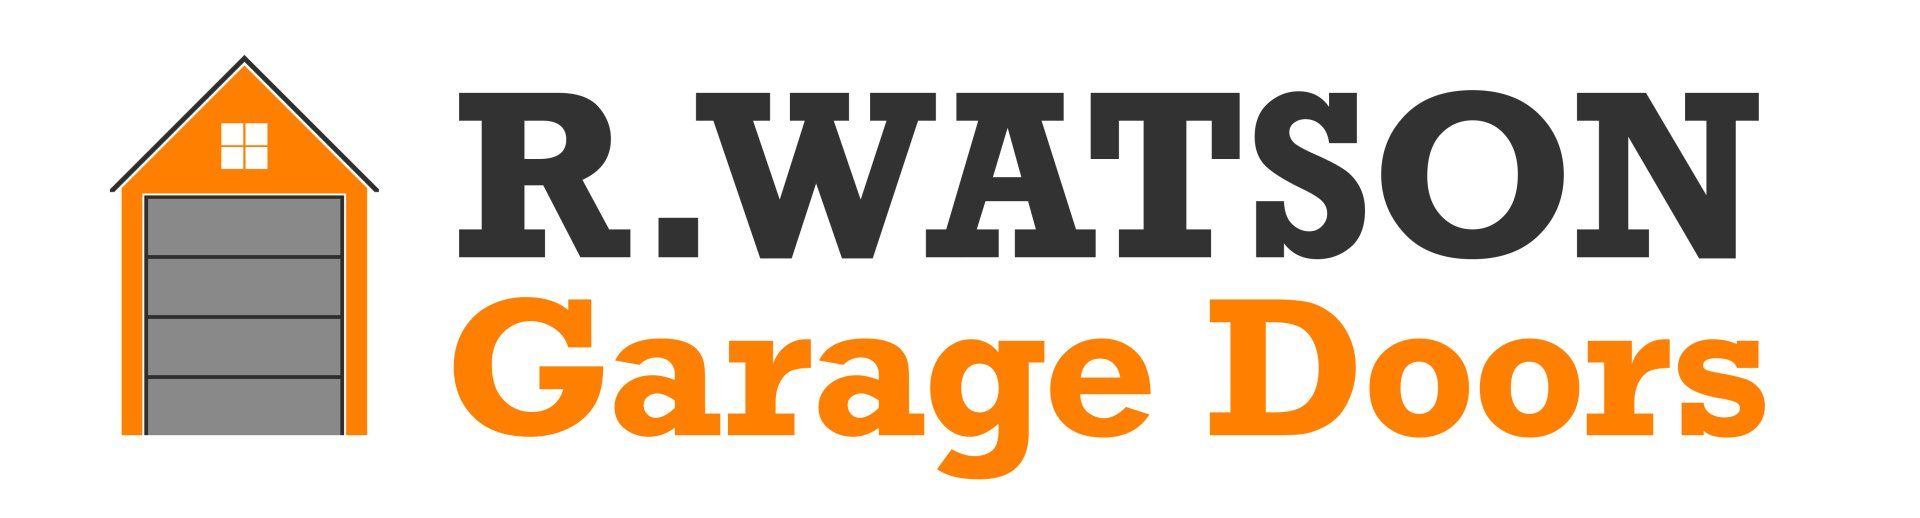 R. Watson garage doors logo